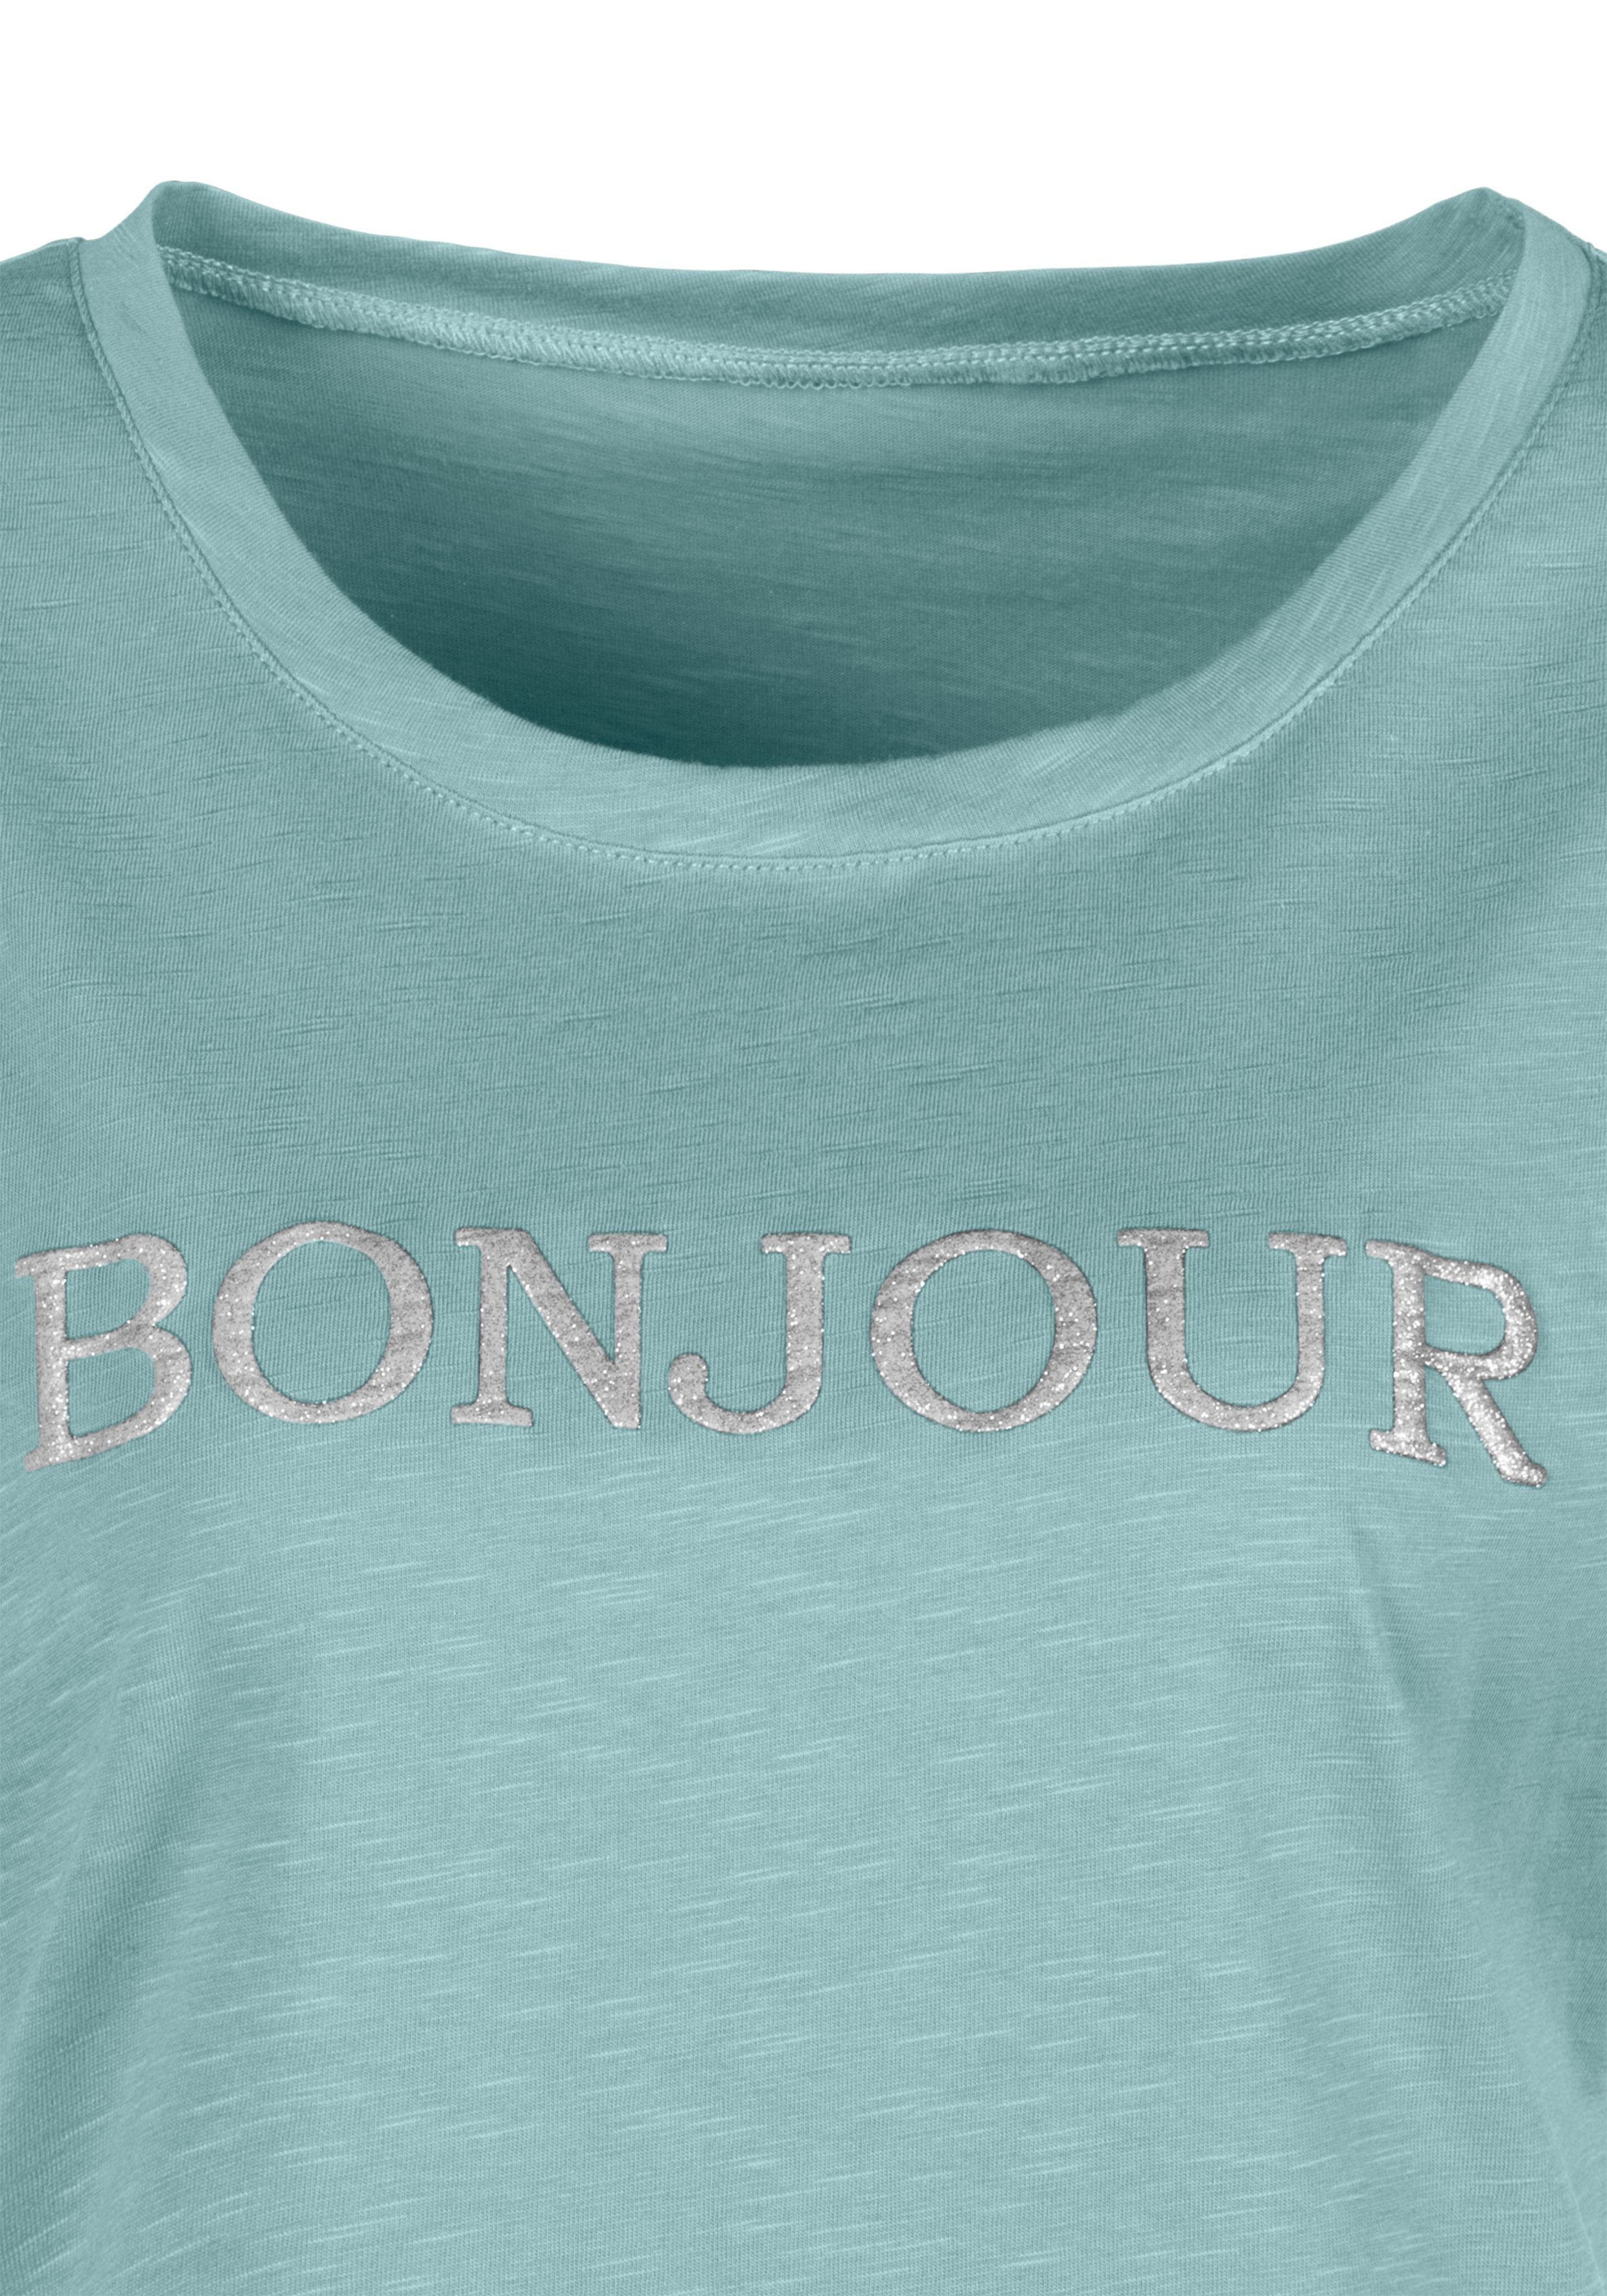 T-Shirt Vivance modischem Frontdruck "Bonjour" mint mit